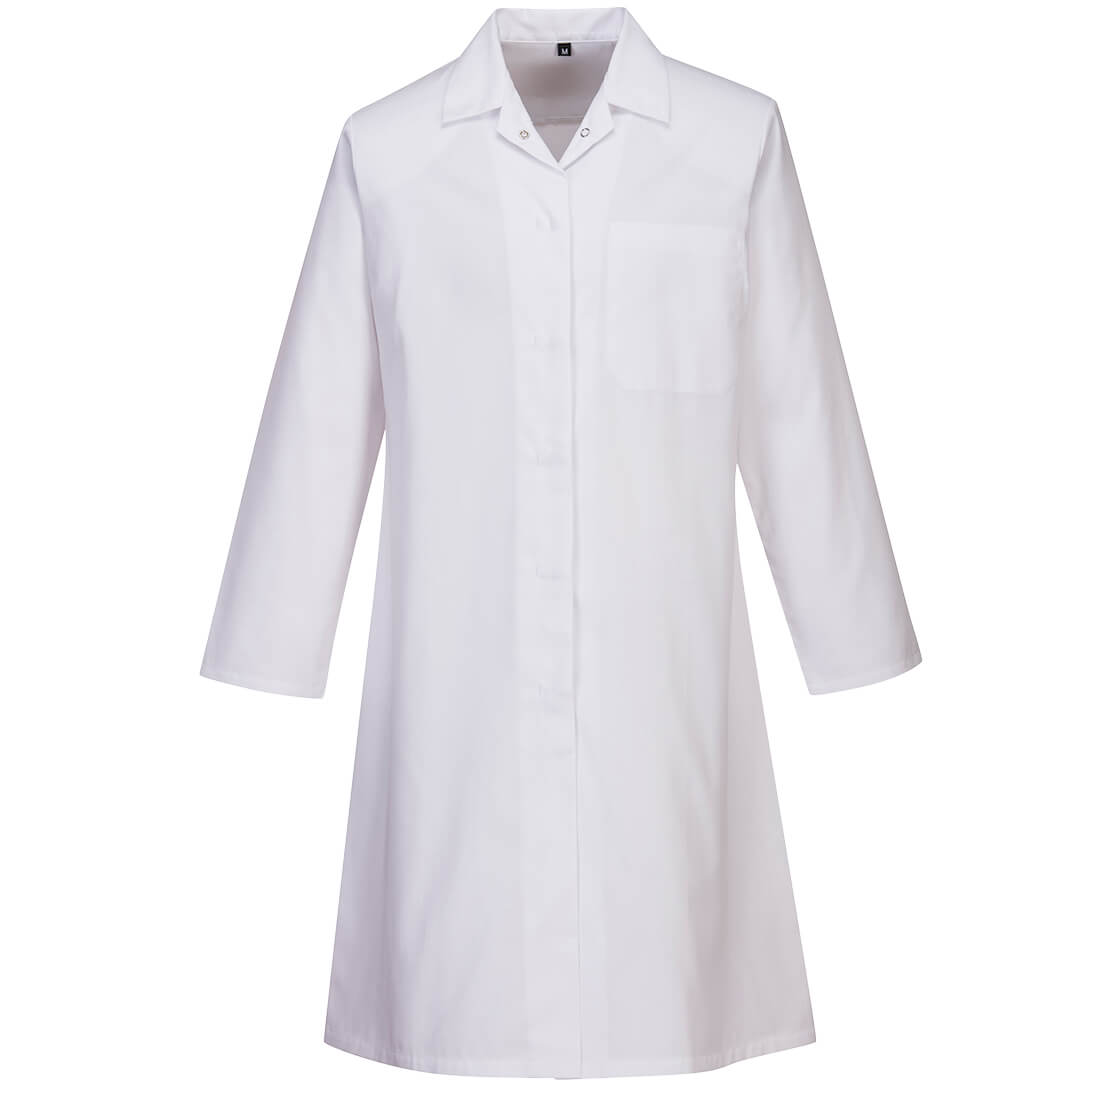 Portwest 2205 White Ladies Food Industry Coat One Pocket Apron jacket ALL SIZES